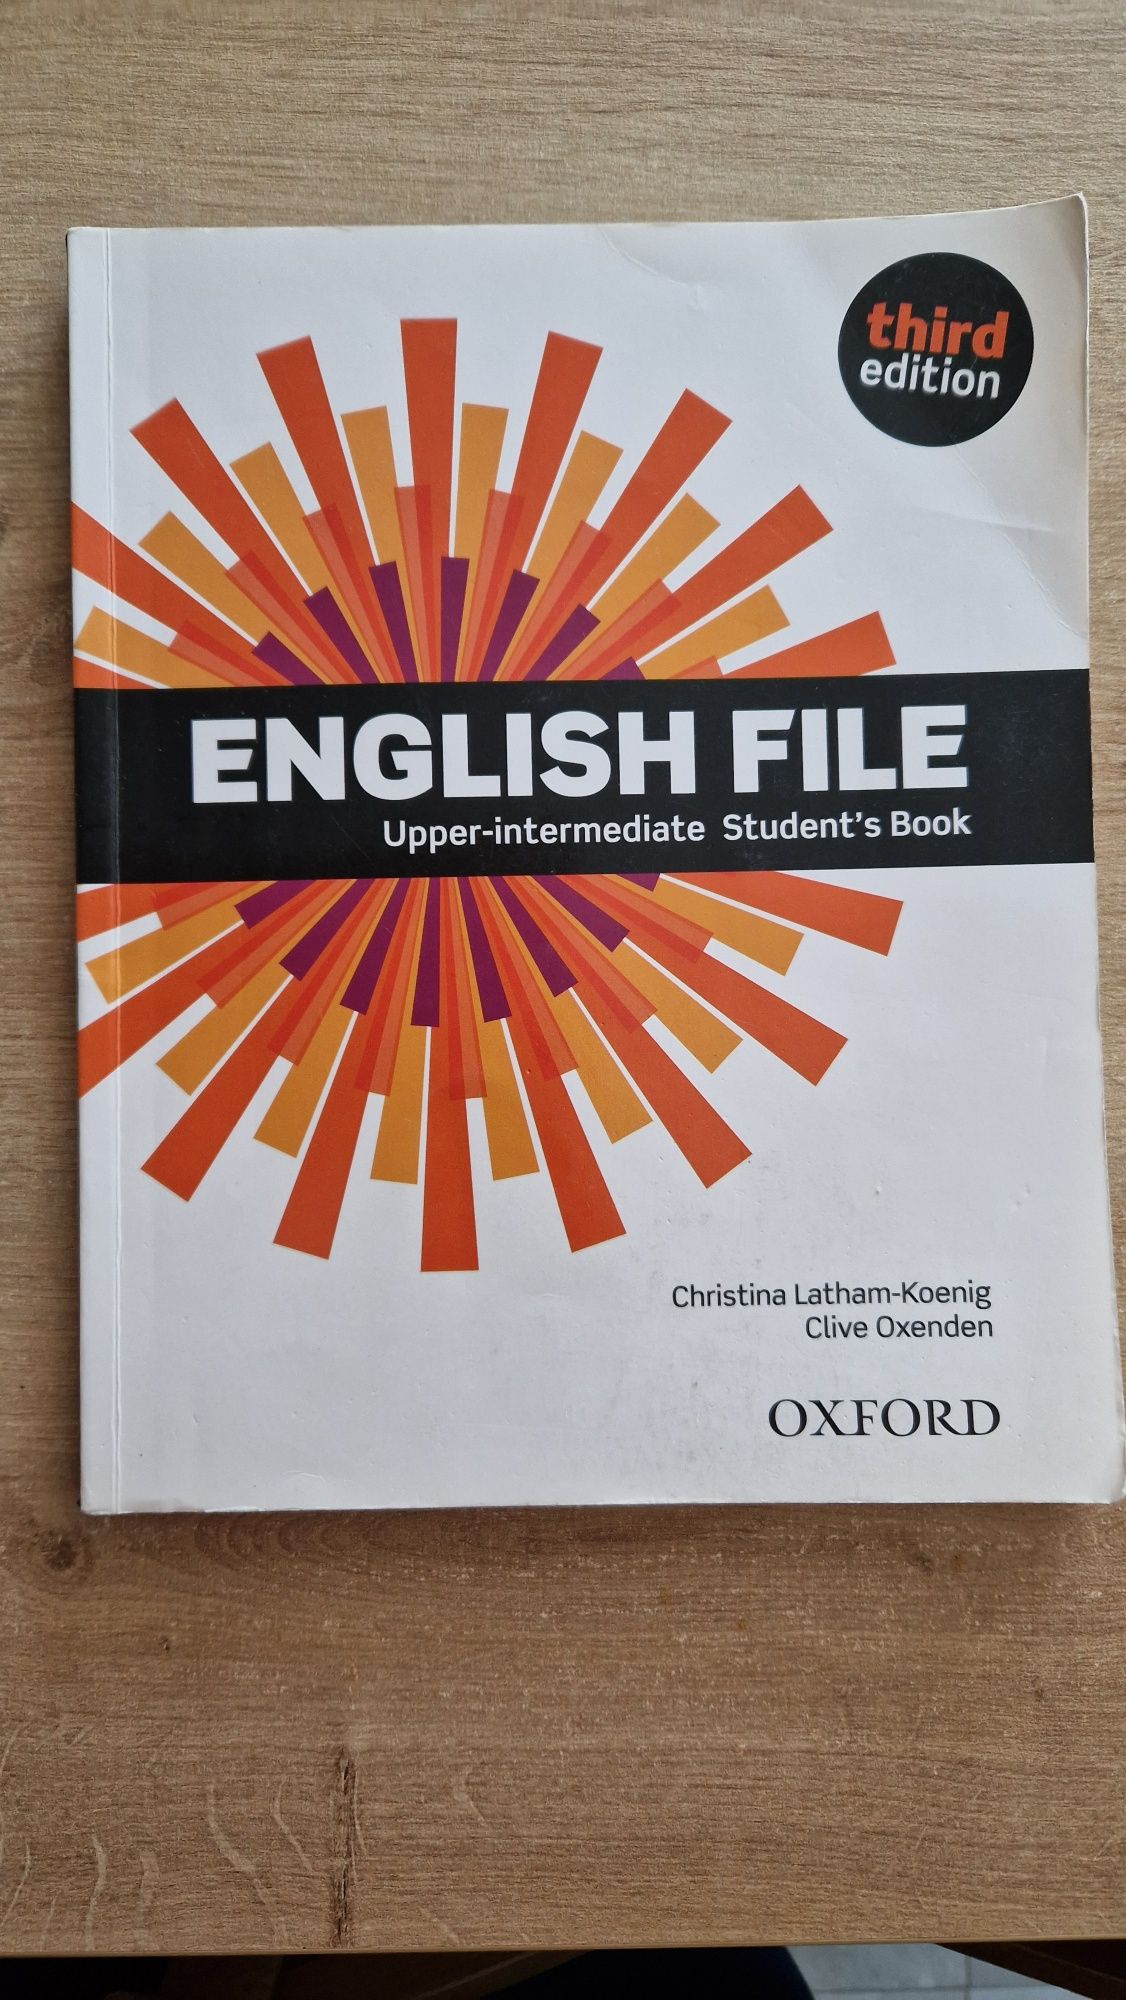 English File 3rd edition Upper-intermediate Student's Book